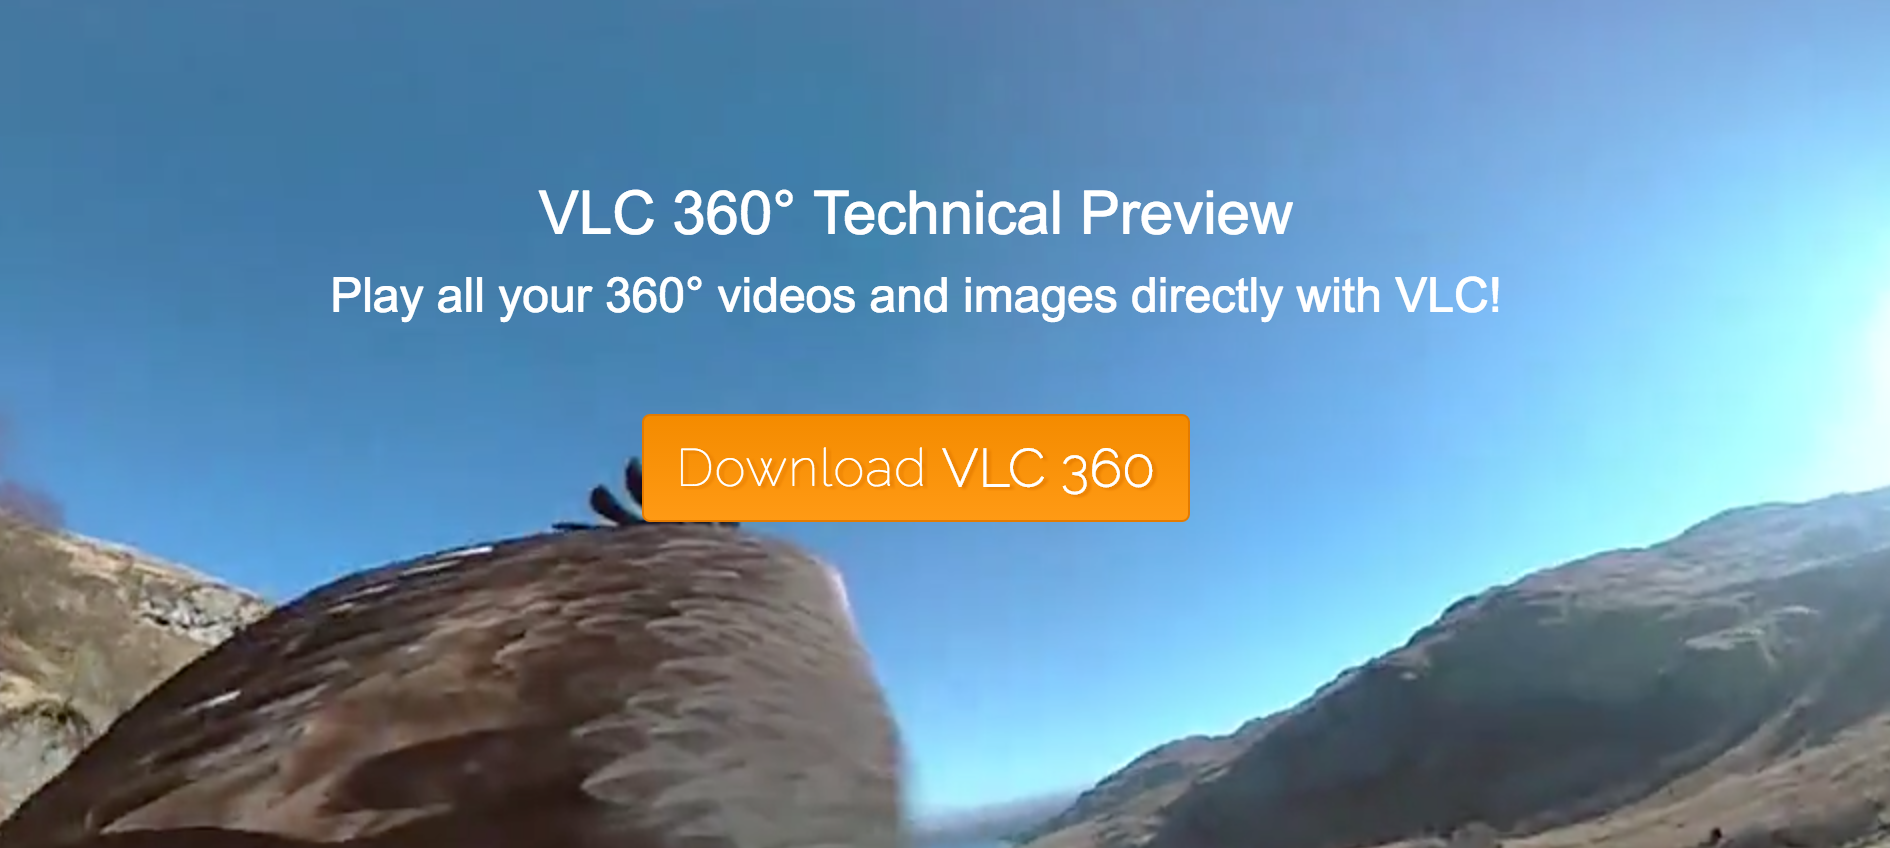 VLC 360